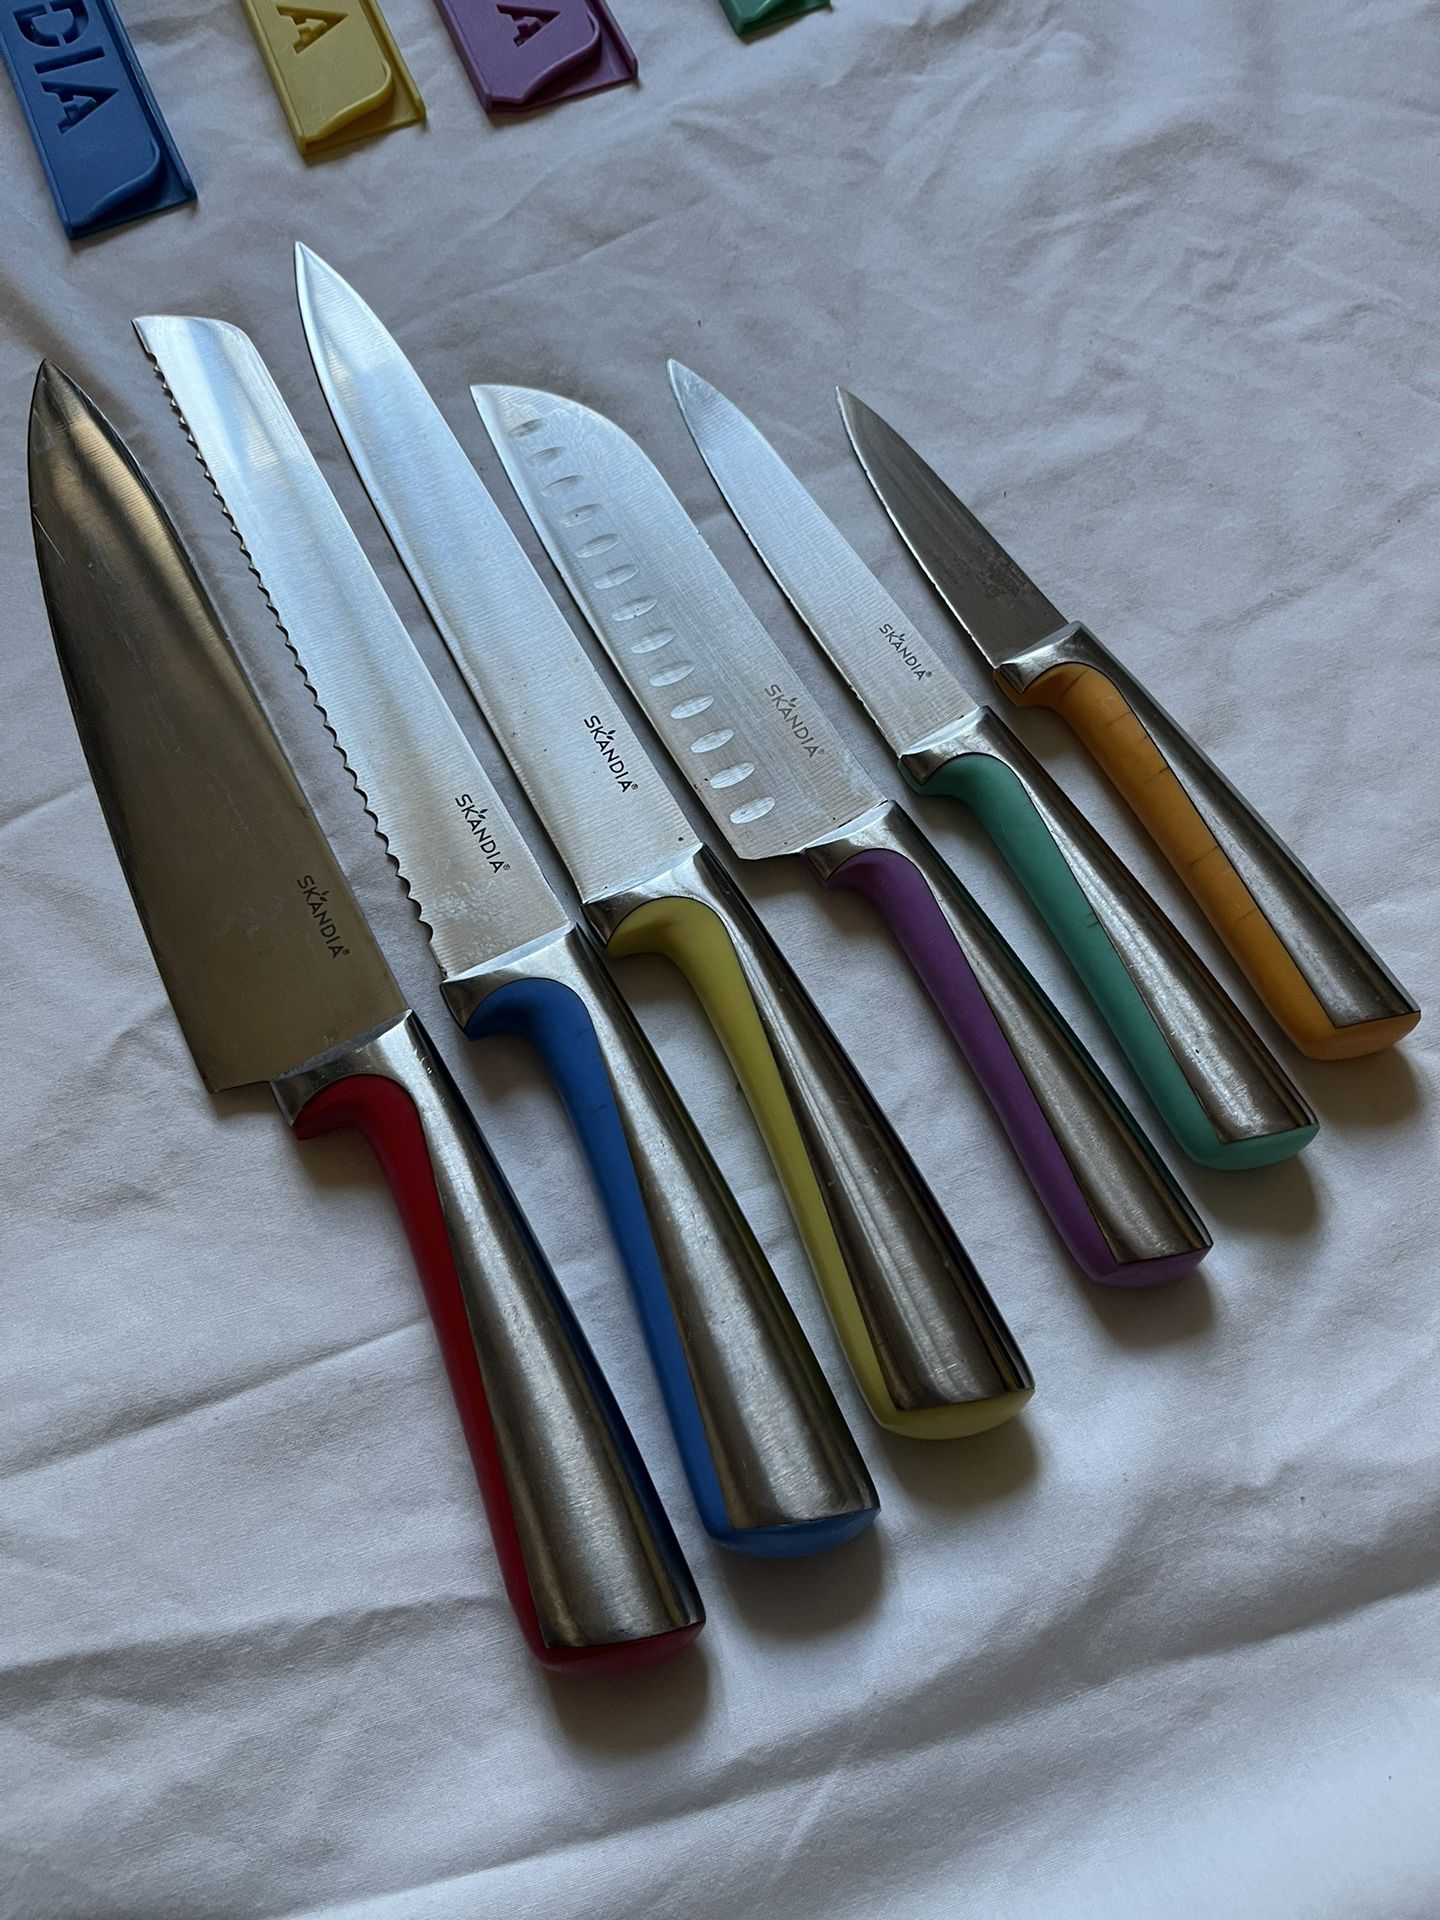 Skandia 5 piece knife set - household items - by owner - housewares sale -  craigslist